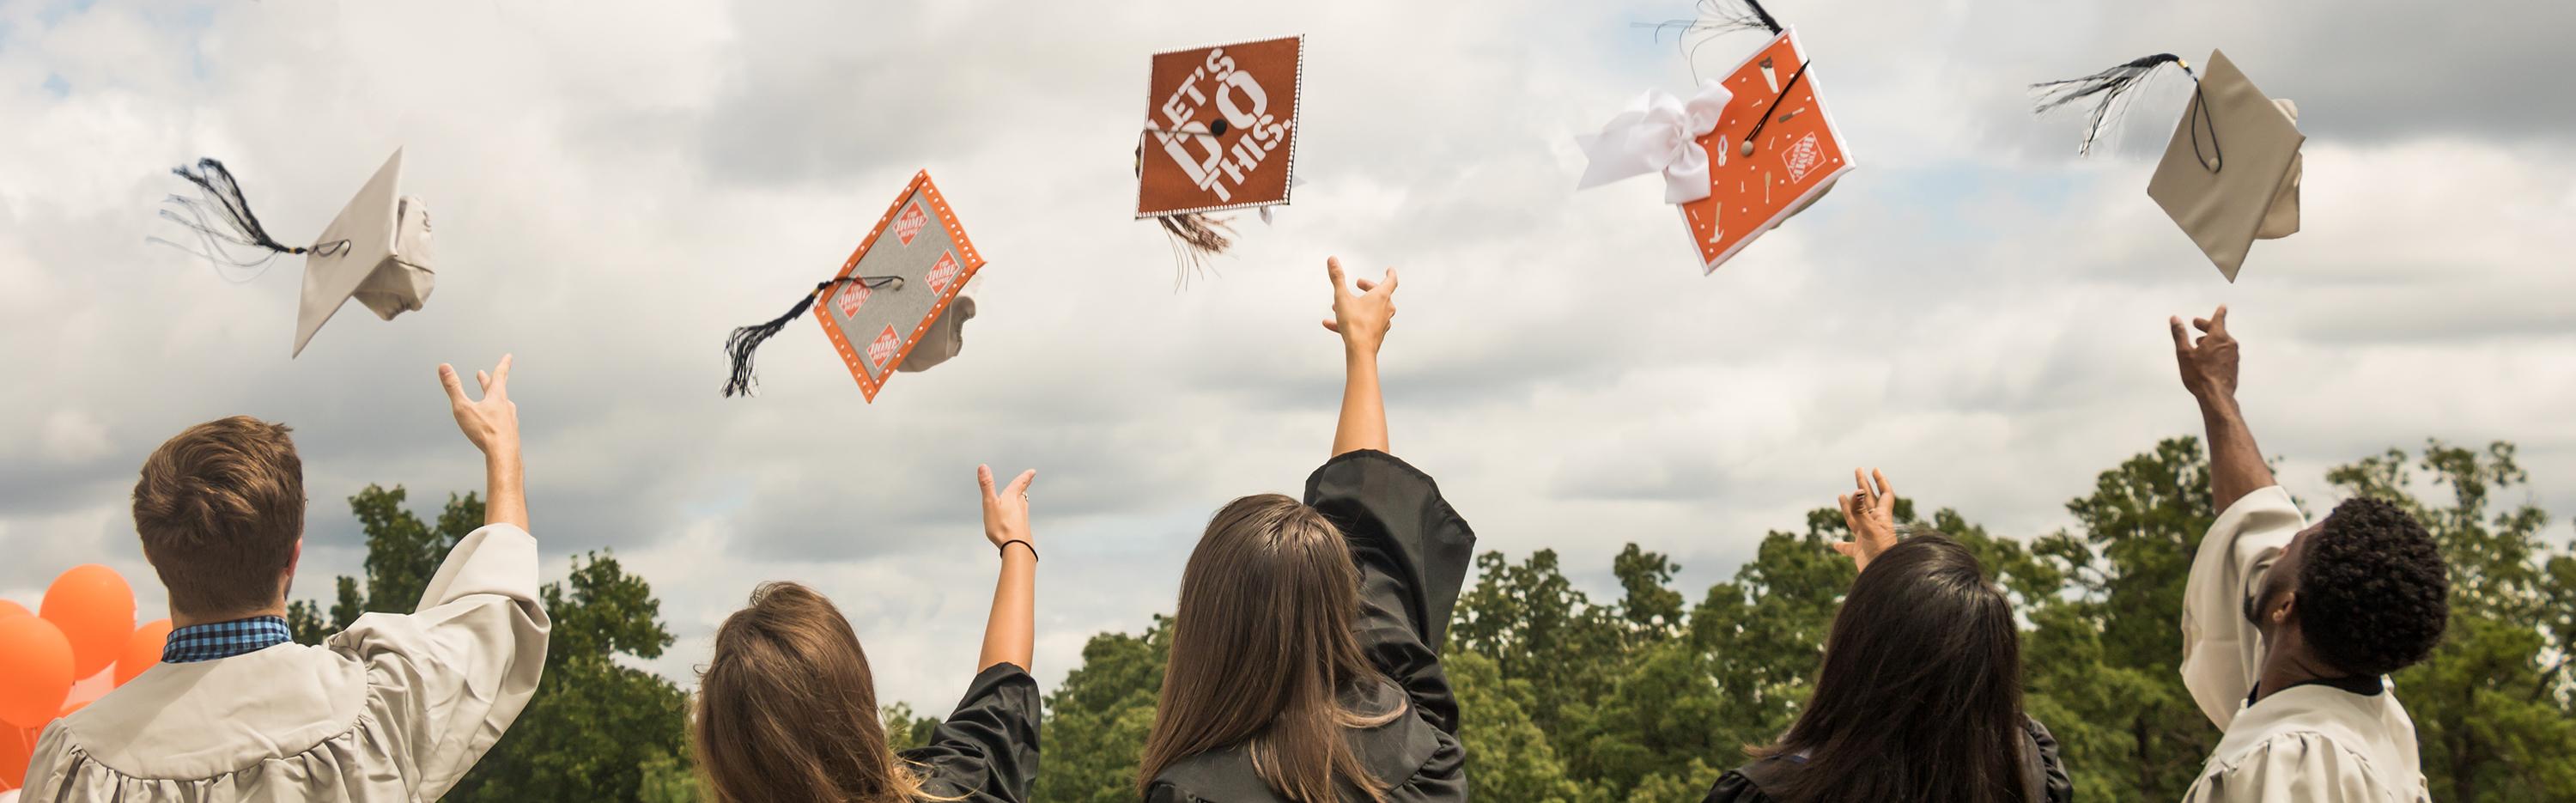 Home Depot interns throw graduation caps